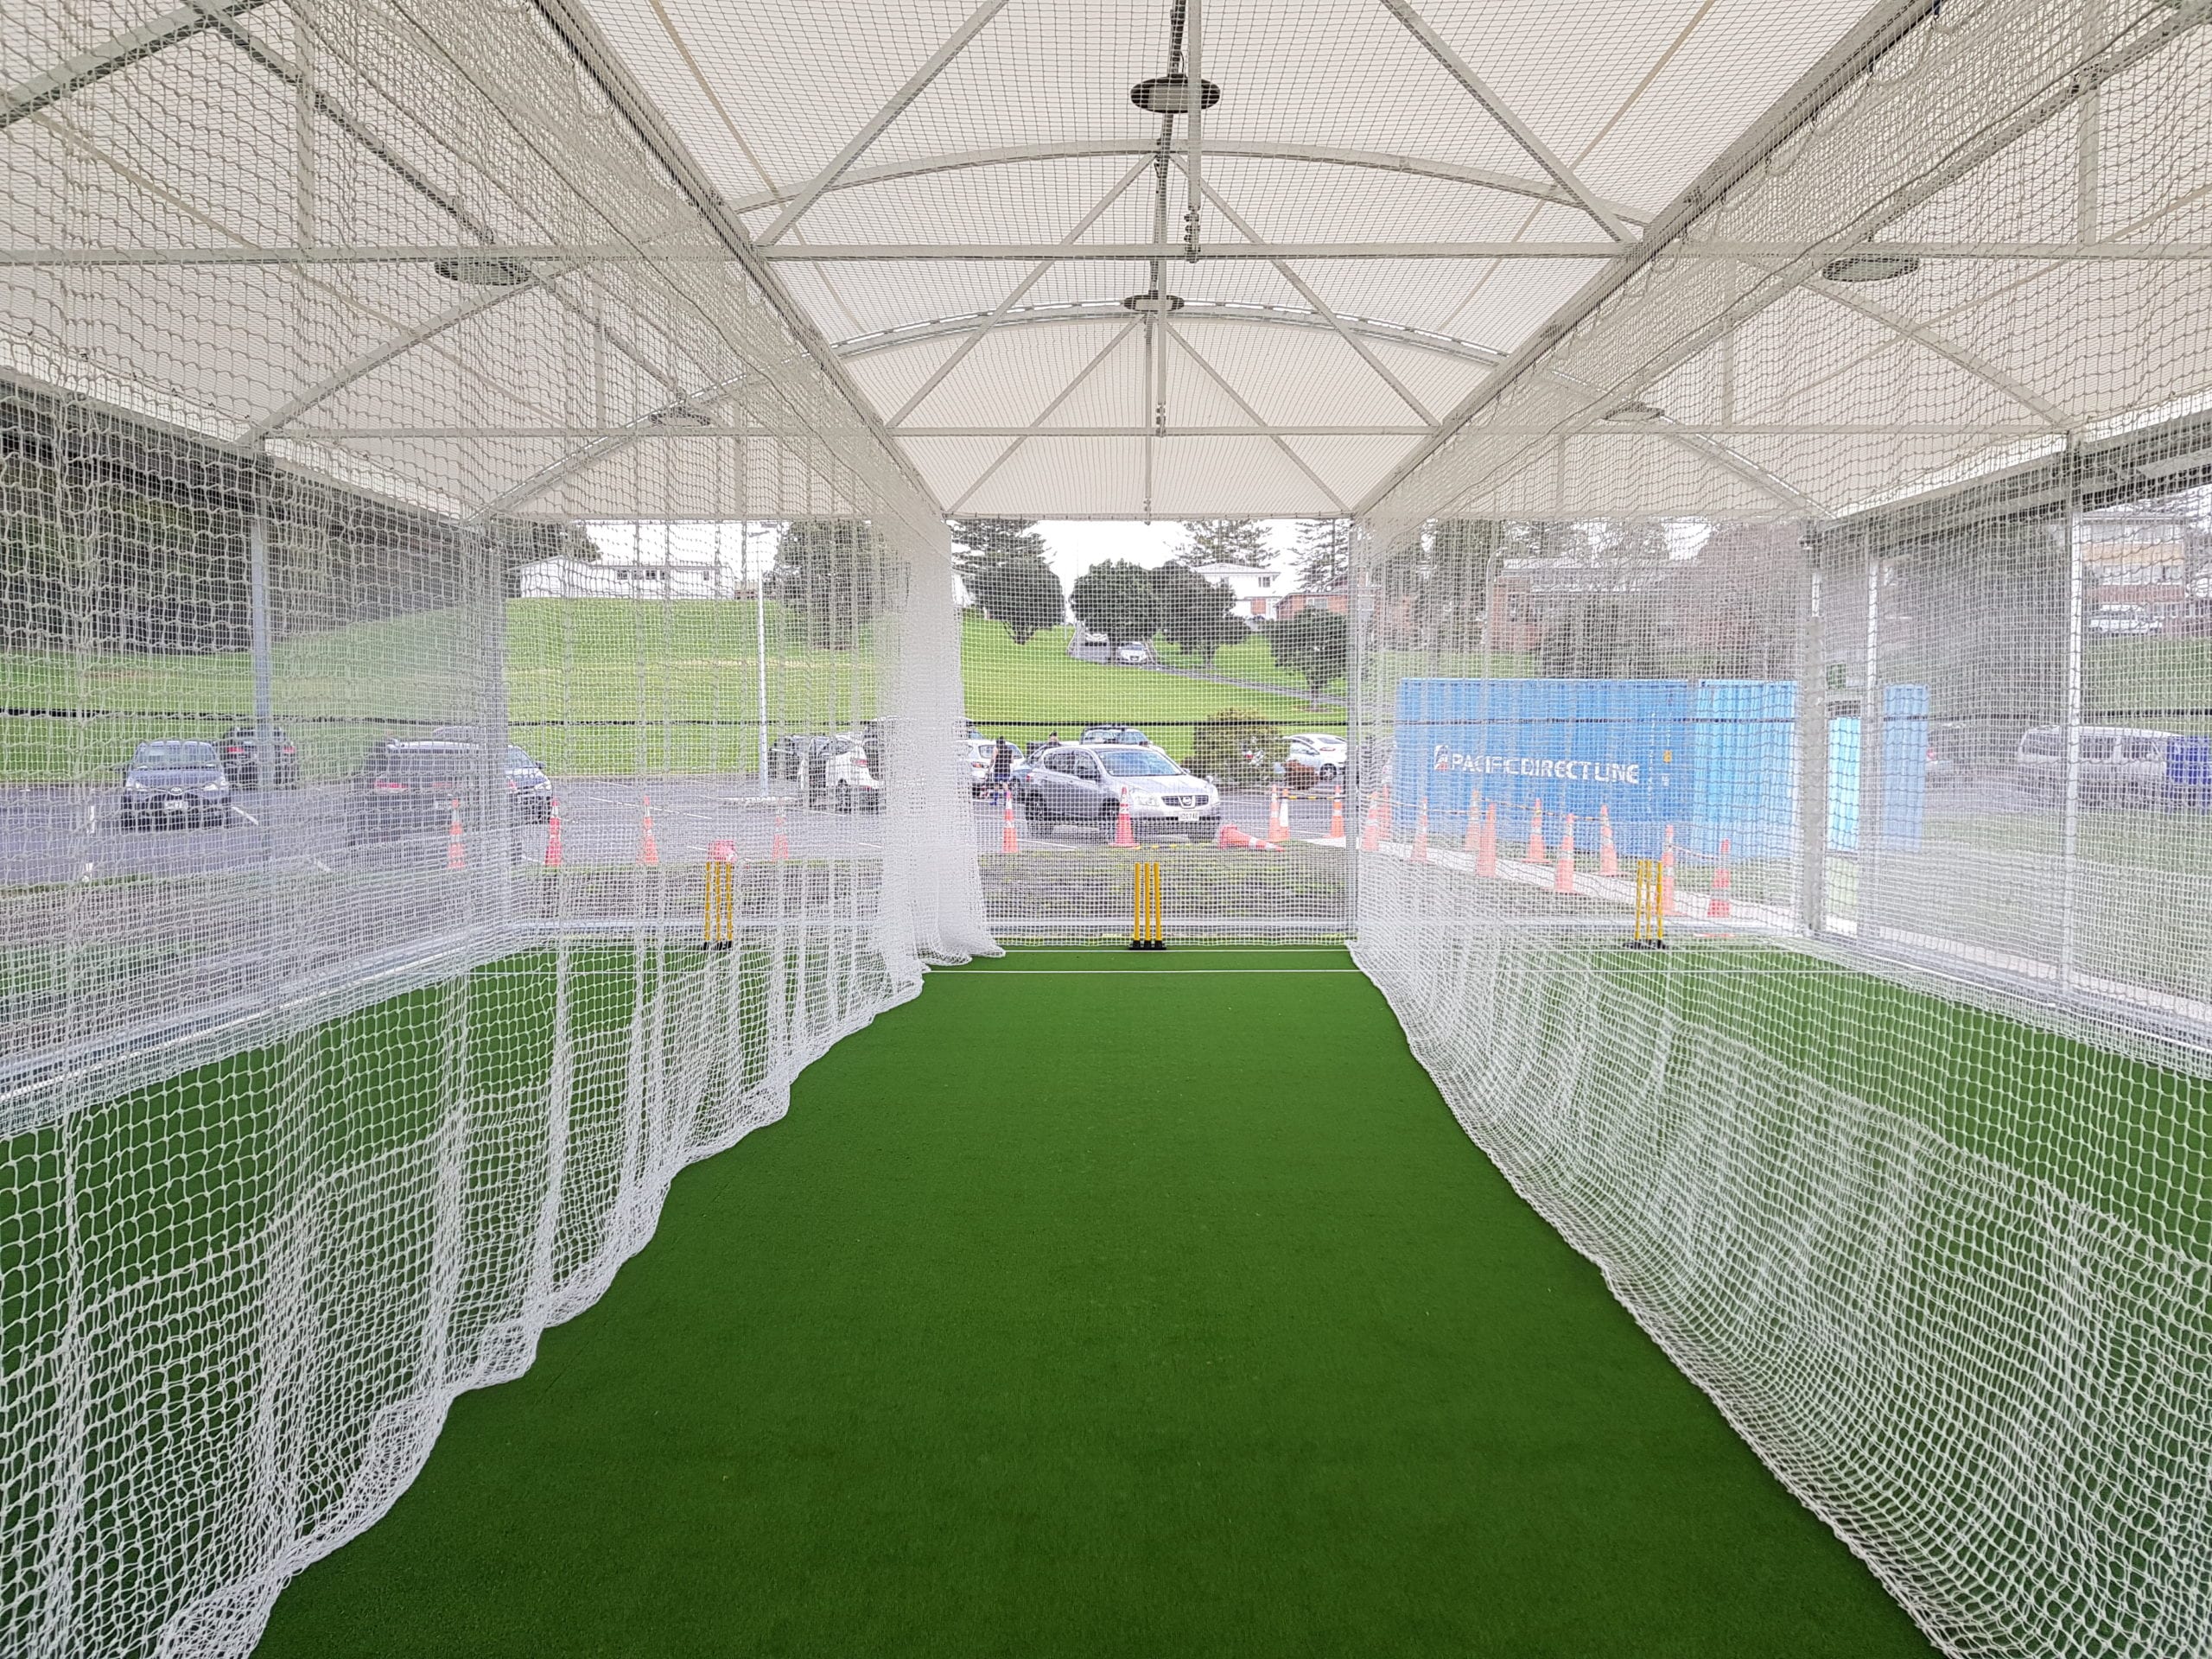 Covered Cricket Nets deliver for Sacred Heart